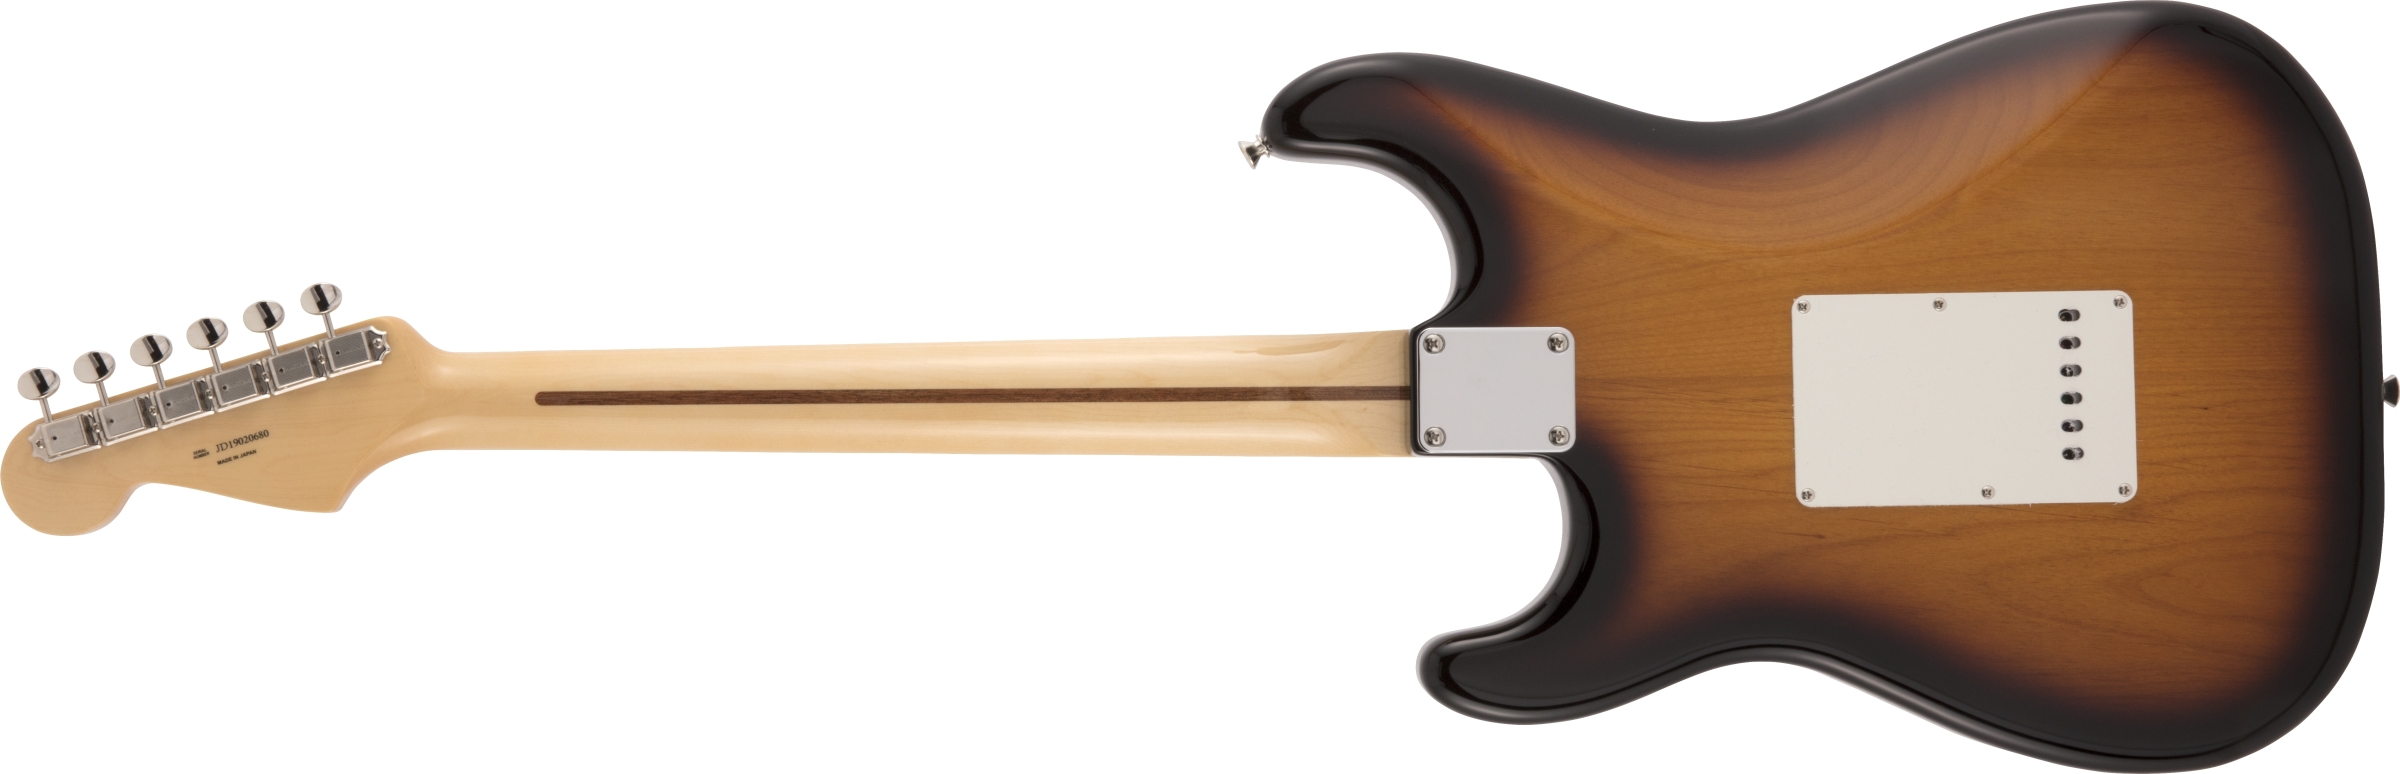 Made in Japan Heritage 50s Stratocaster 2-Color Sunburst背面画像